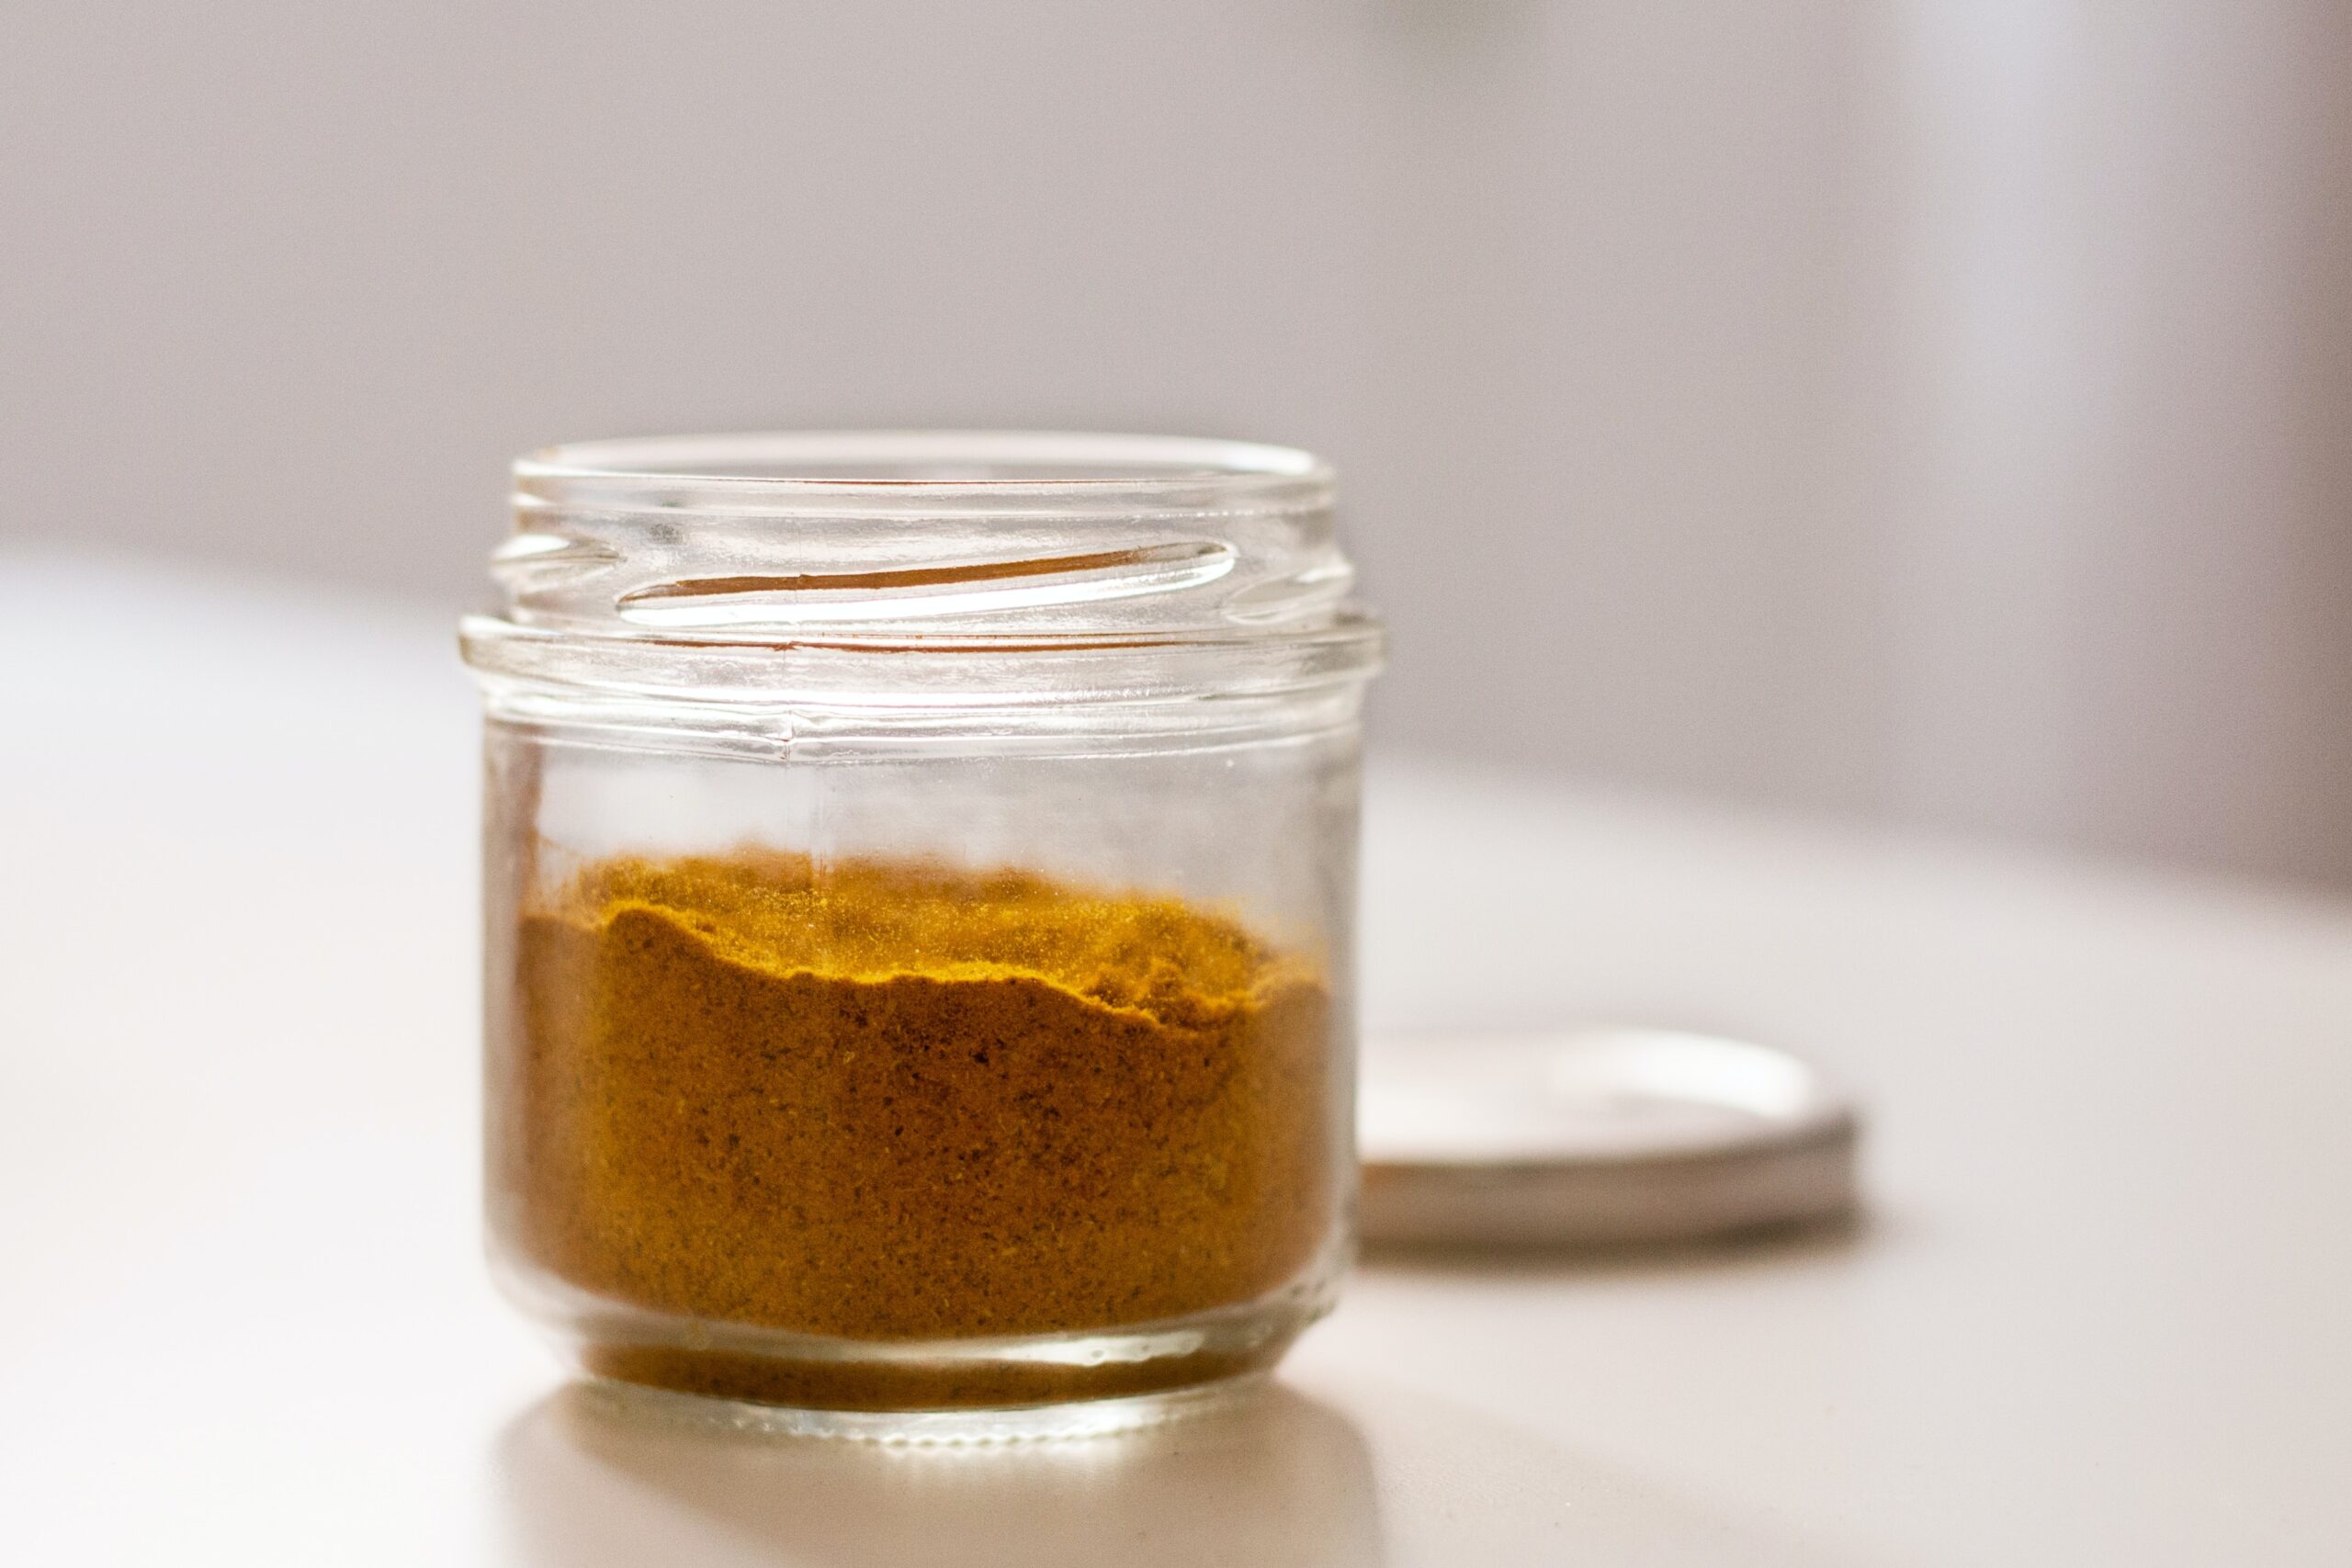 An opened jar of turmeric spice